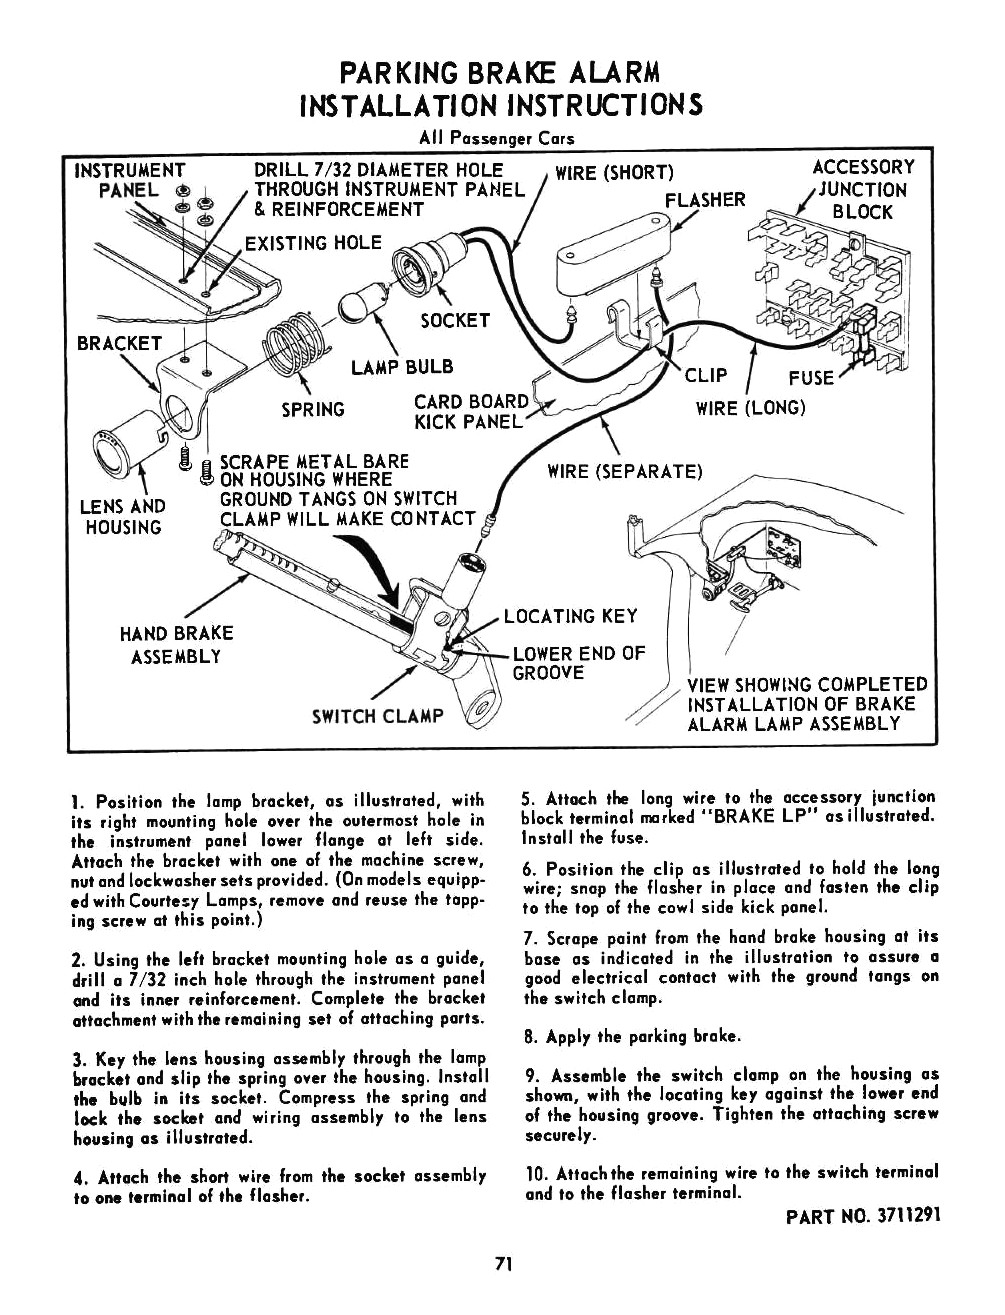 1955_Chevrolet_Acc_Manual-71